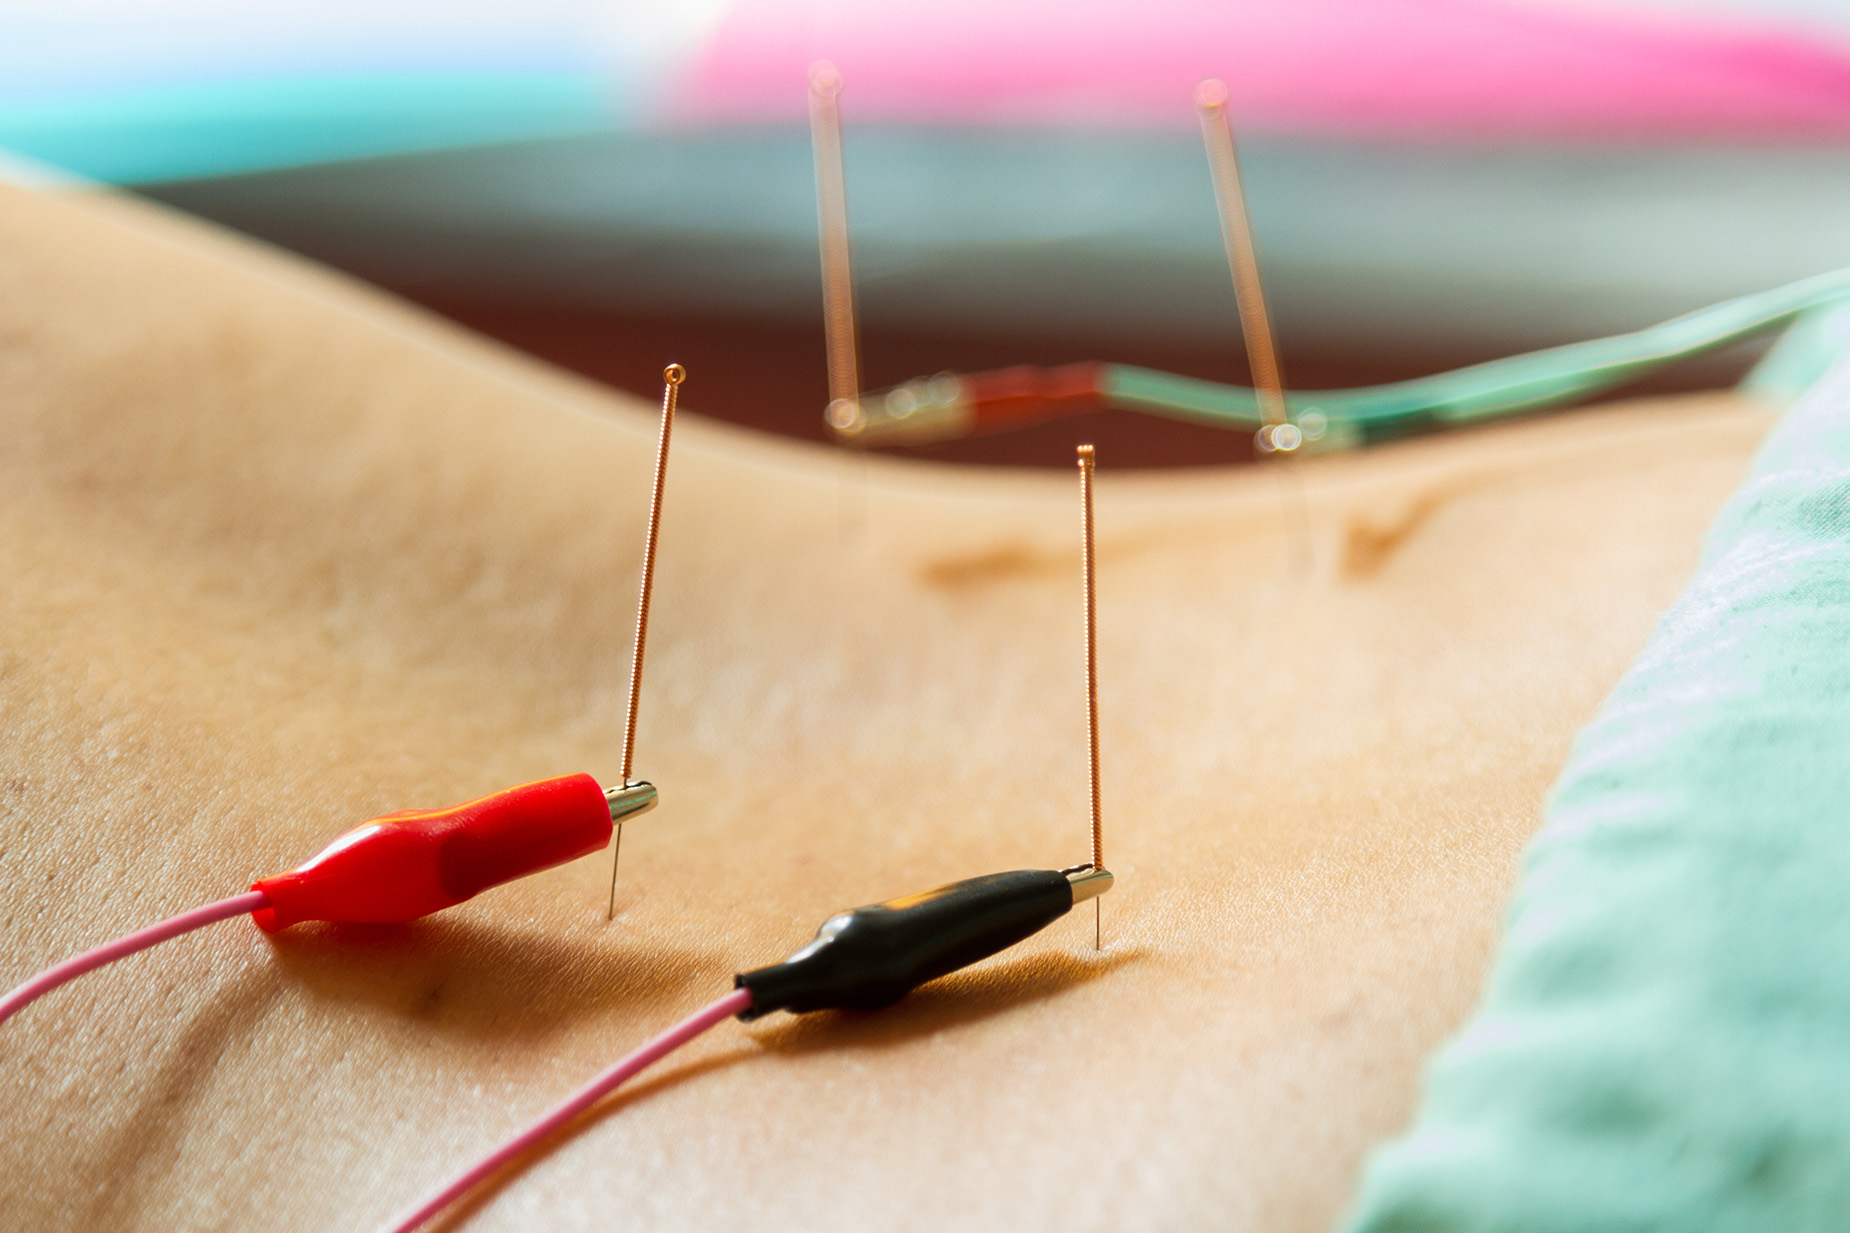 Electro Dry Needling – EP Bodywork Therapy